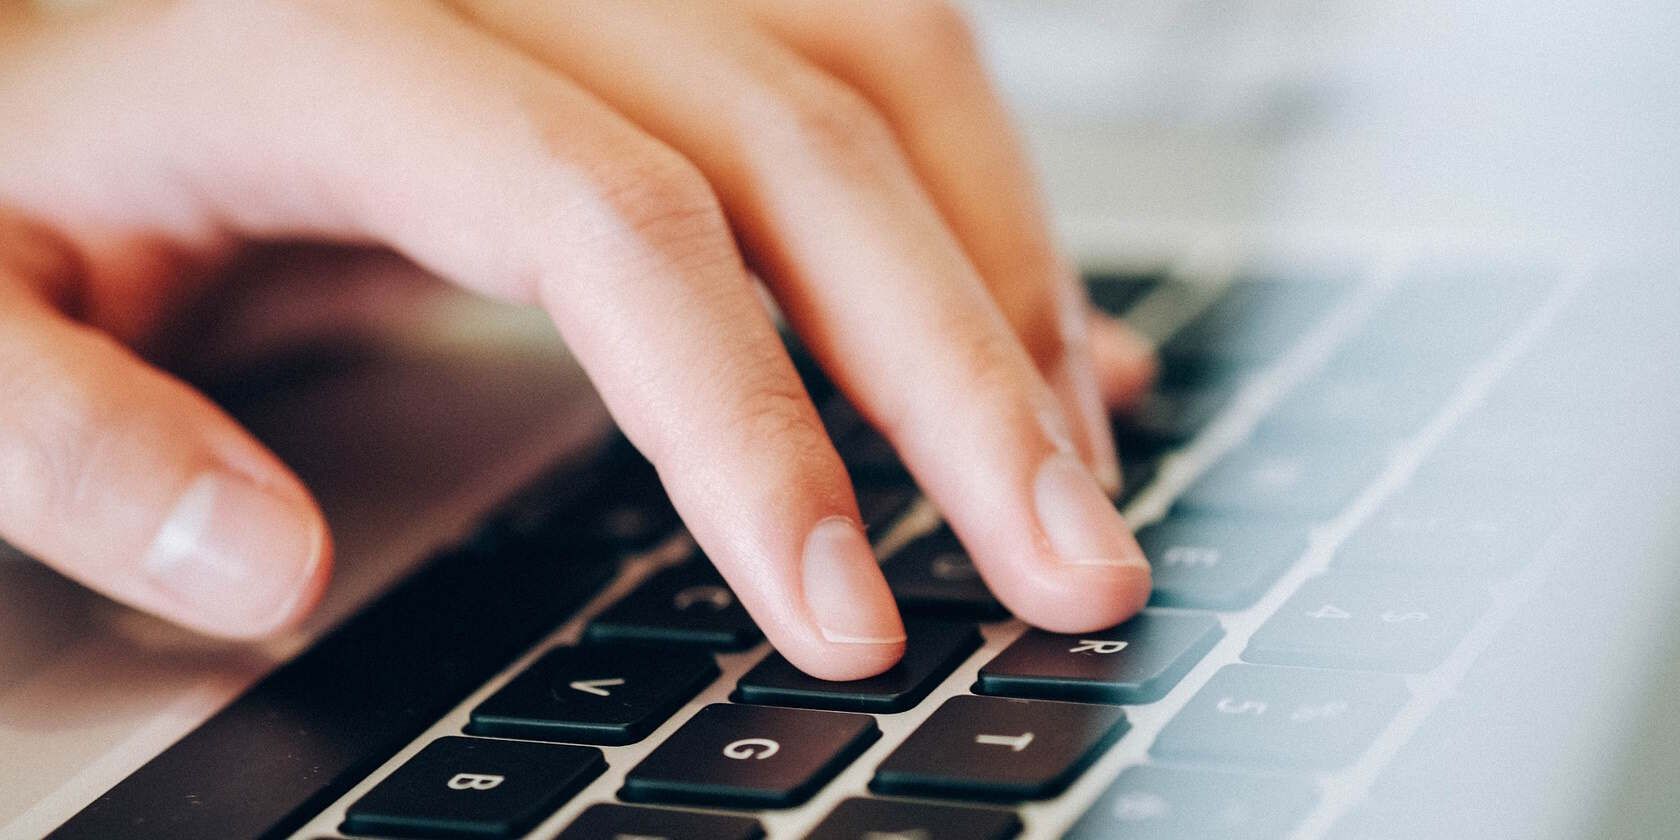 Fingers Typing on a Laptop Keyboard